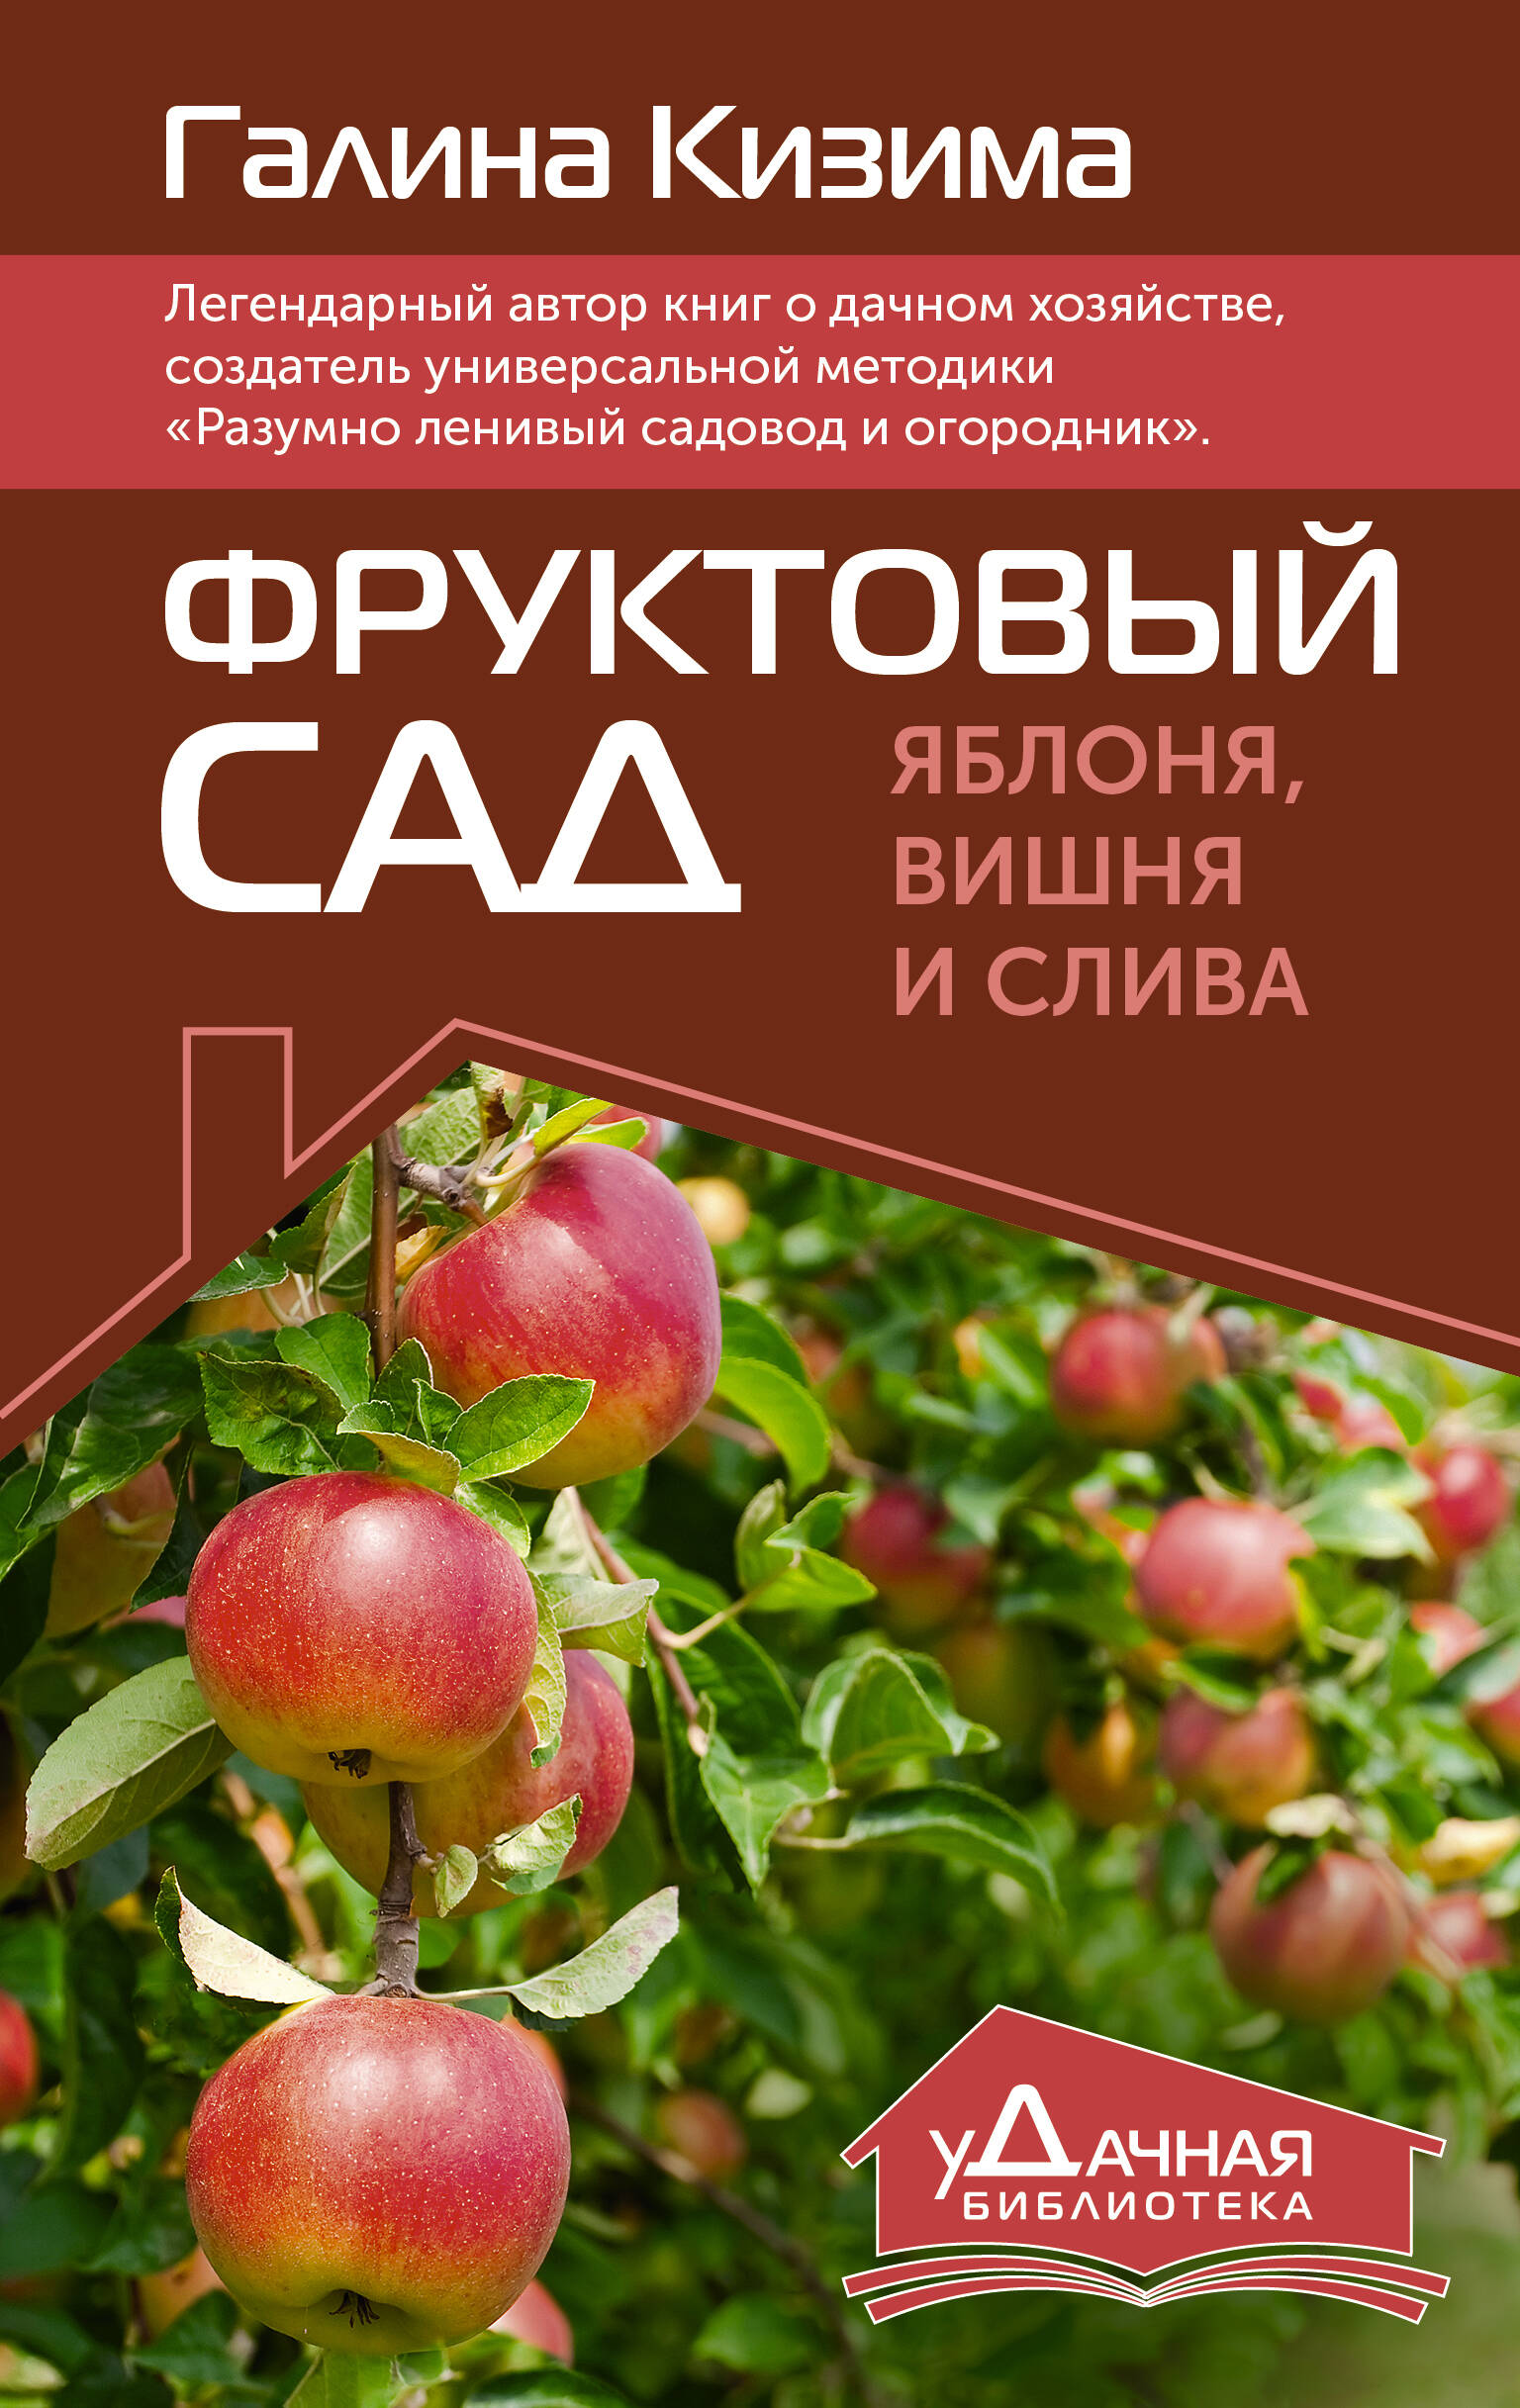 кизима галина александровна фруктовый сад вишня слива и яблоня Фруктовый сад. Яблоня, вишня и слива